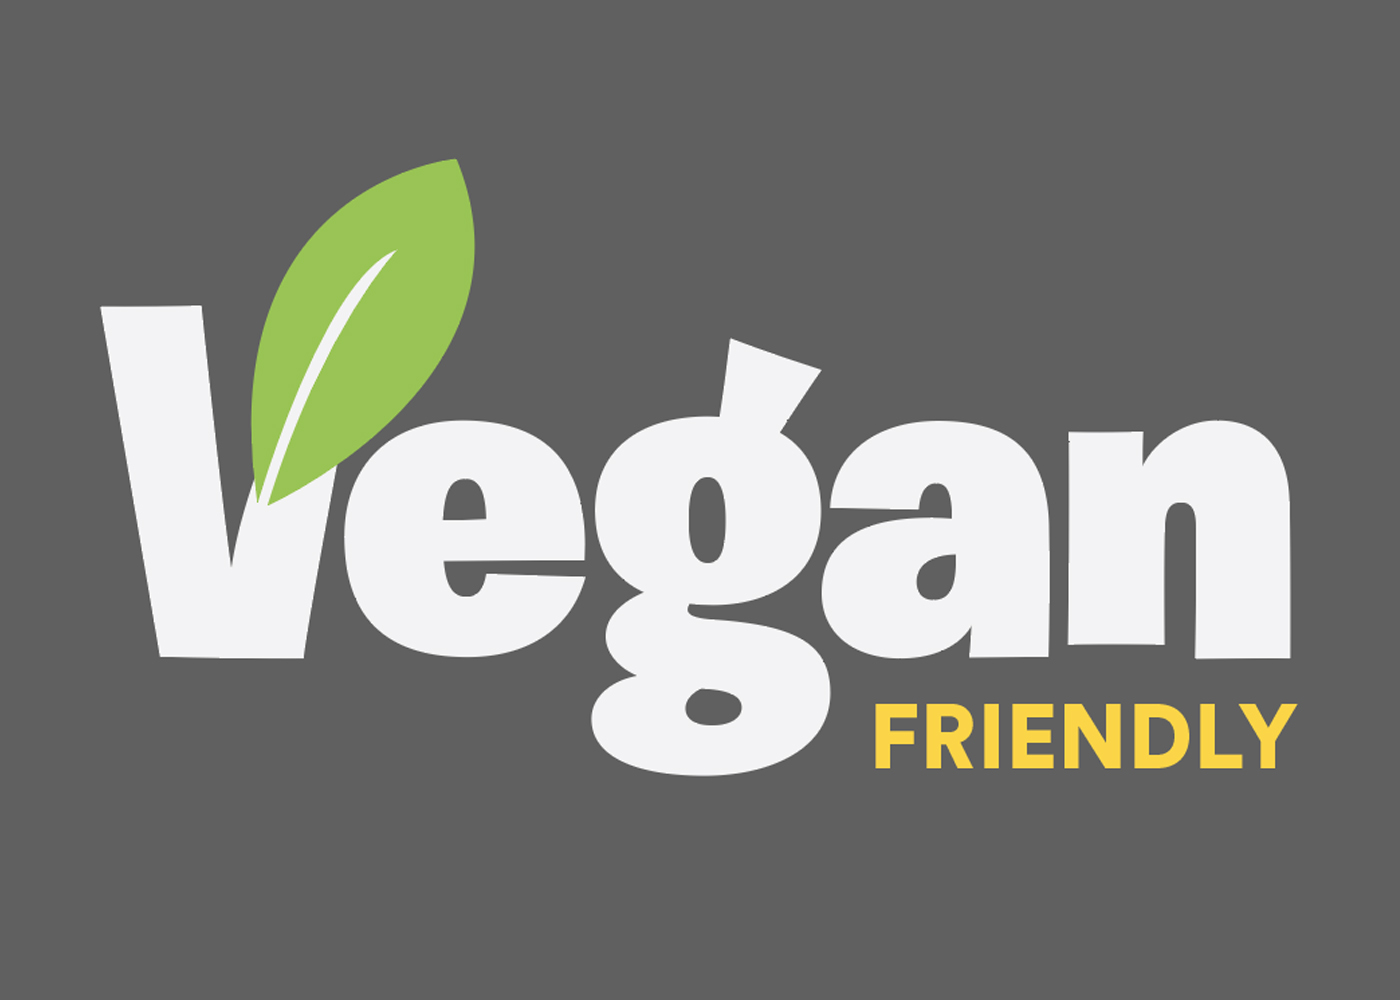 We are Vegan Friendly